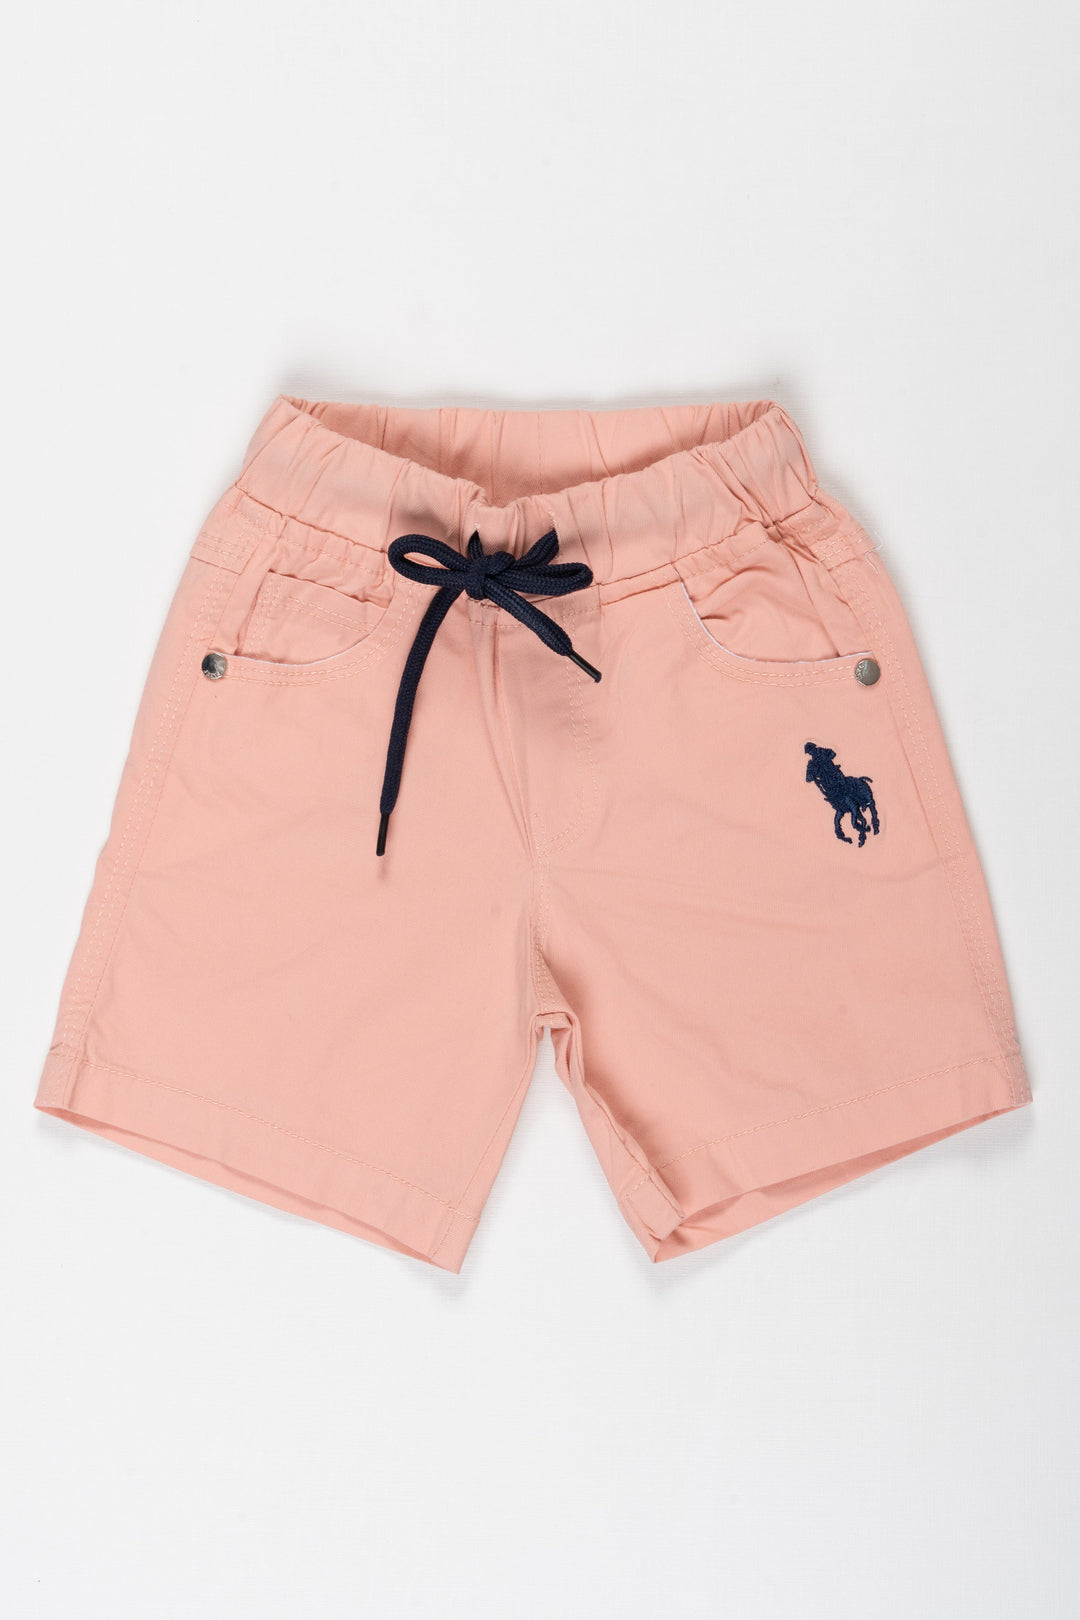 The Nesavu Boys Shorts Boys Soft Cotton Knee-Length Summer Shorts in Blush Pink Nesavu 18 (2Y) / Pink / Cotton BWS001D-18 Blush Pink Cotton Shorts for Boys | Comfortable Summer Knee Length Wear | The Nesavu